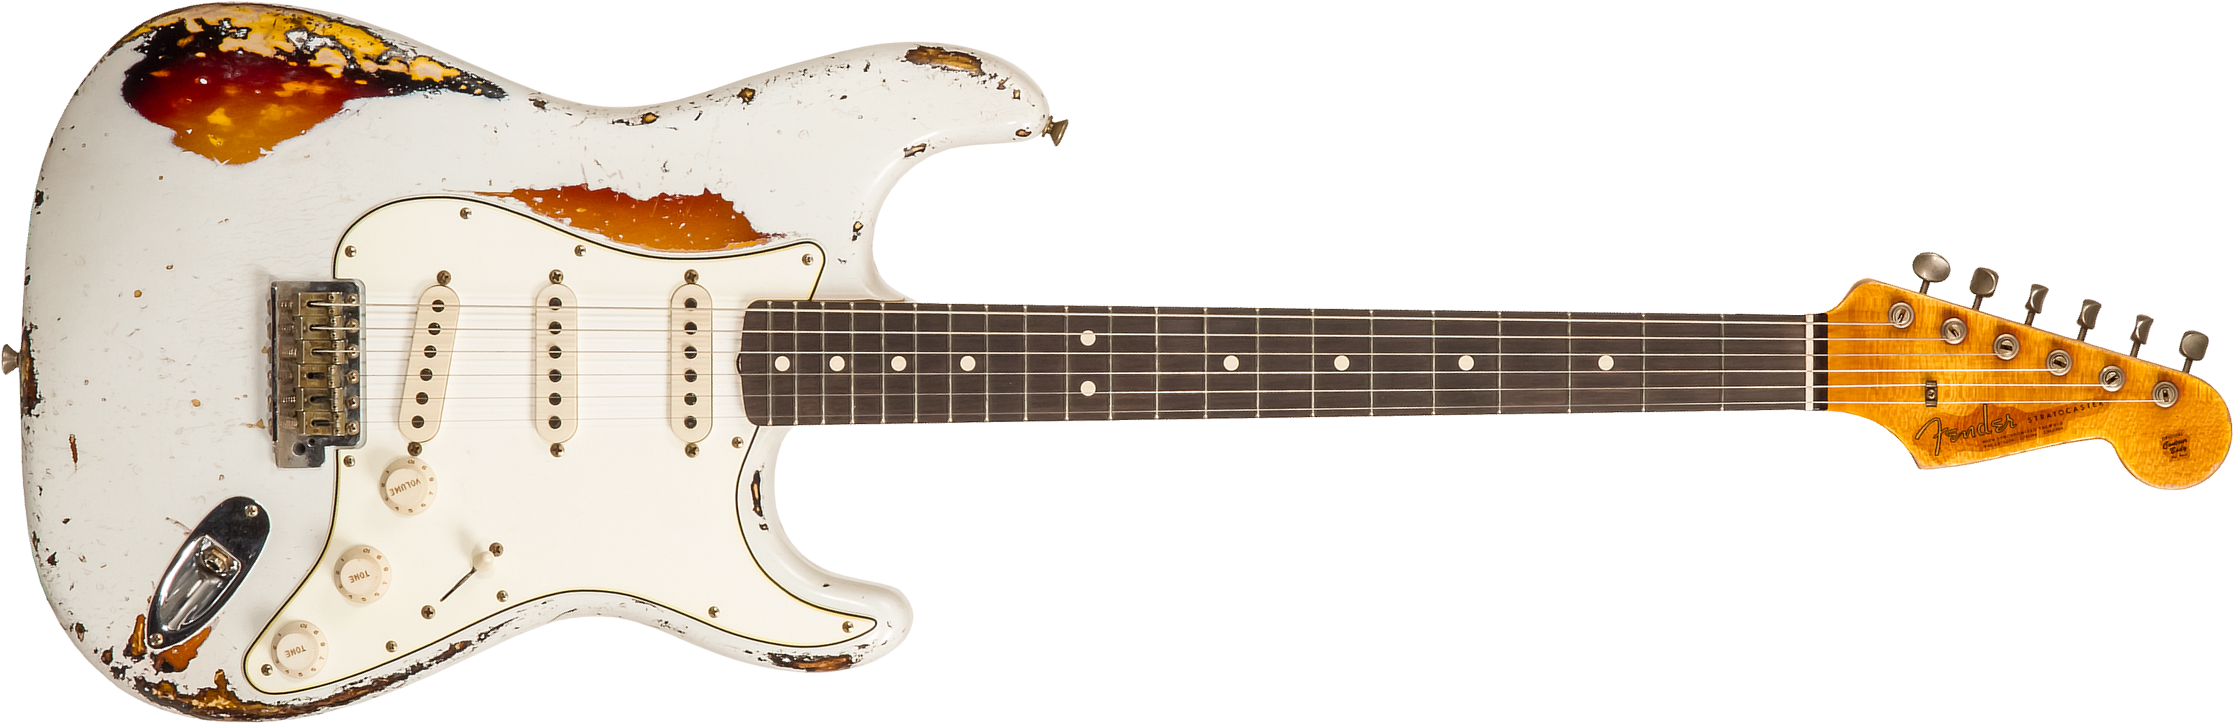 Fender Custom Shop Strat 1963 Masterbuilt K.mcmillin Bla #r117544 - Ultimate Relic Olympic White/3-color Sunburst - Str shape electric guitar - Main p